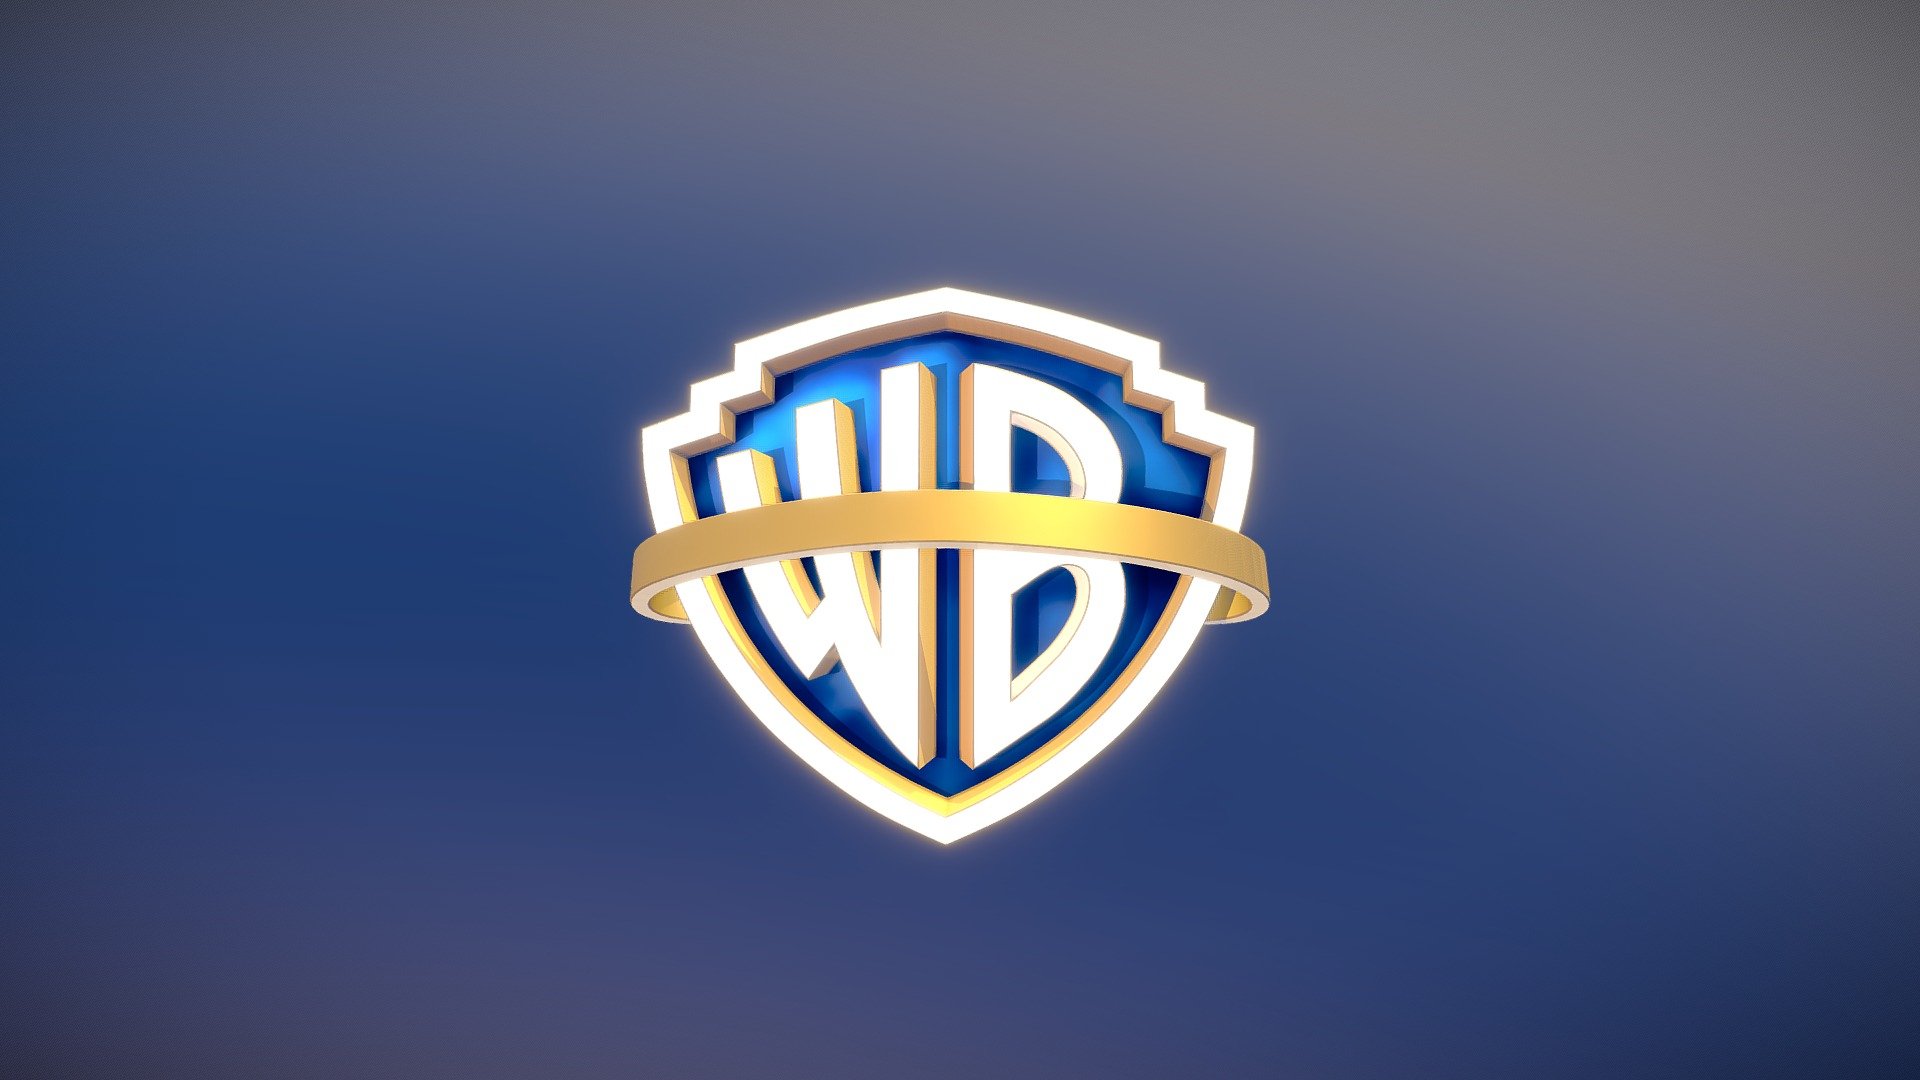 Уорнер БРОС Пикчерз. Ворнер БРОС Пикчерз лого. Warner Bros pictures СТС. Глава Warner Bros. Варнер фф